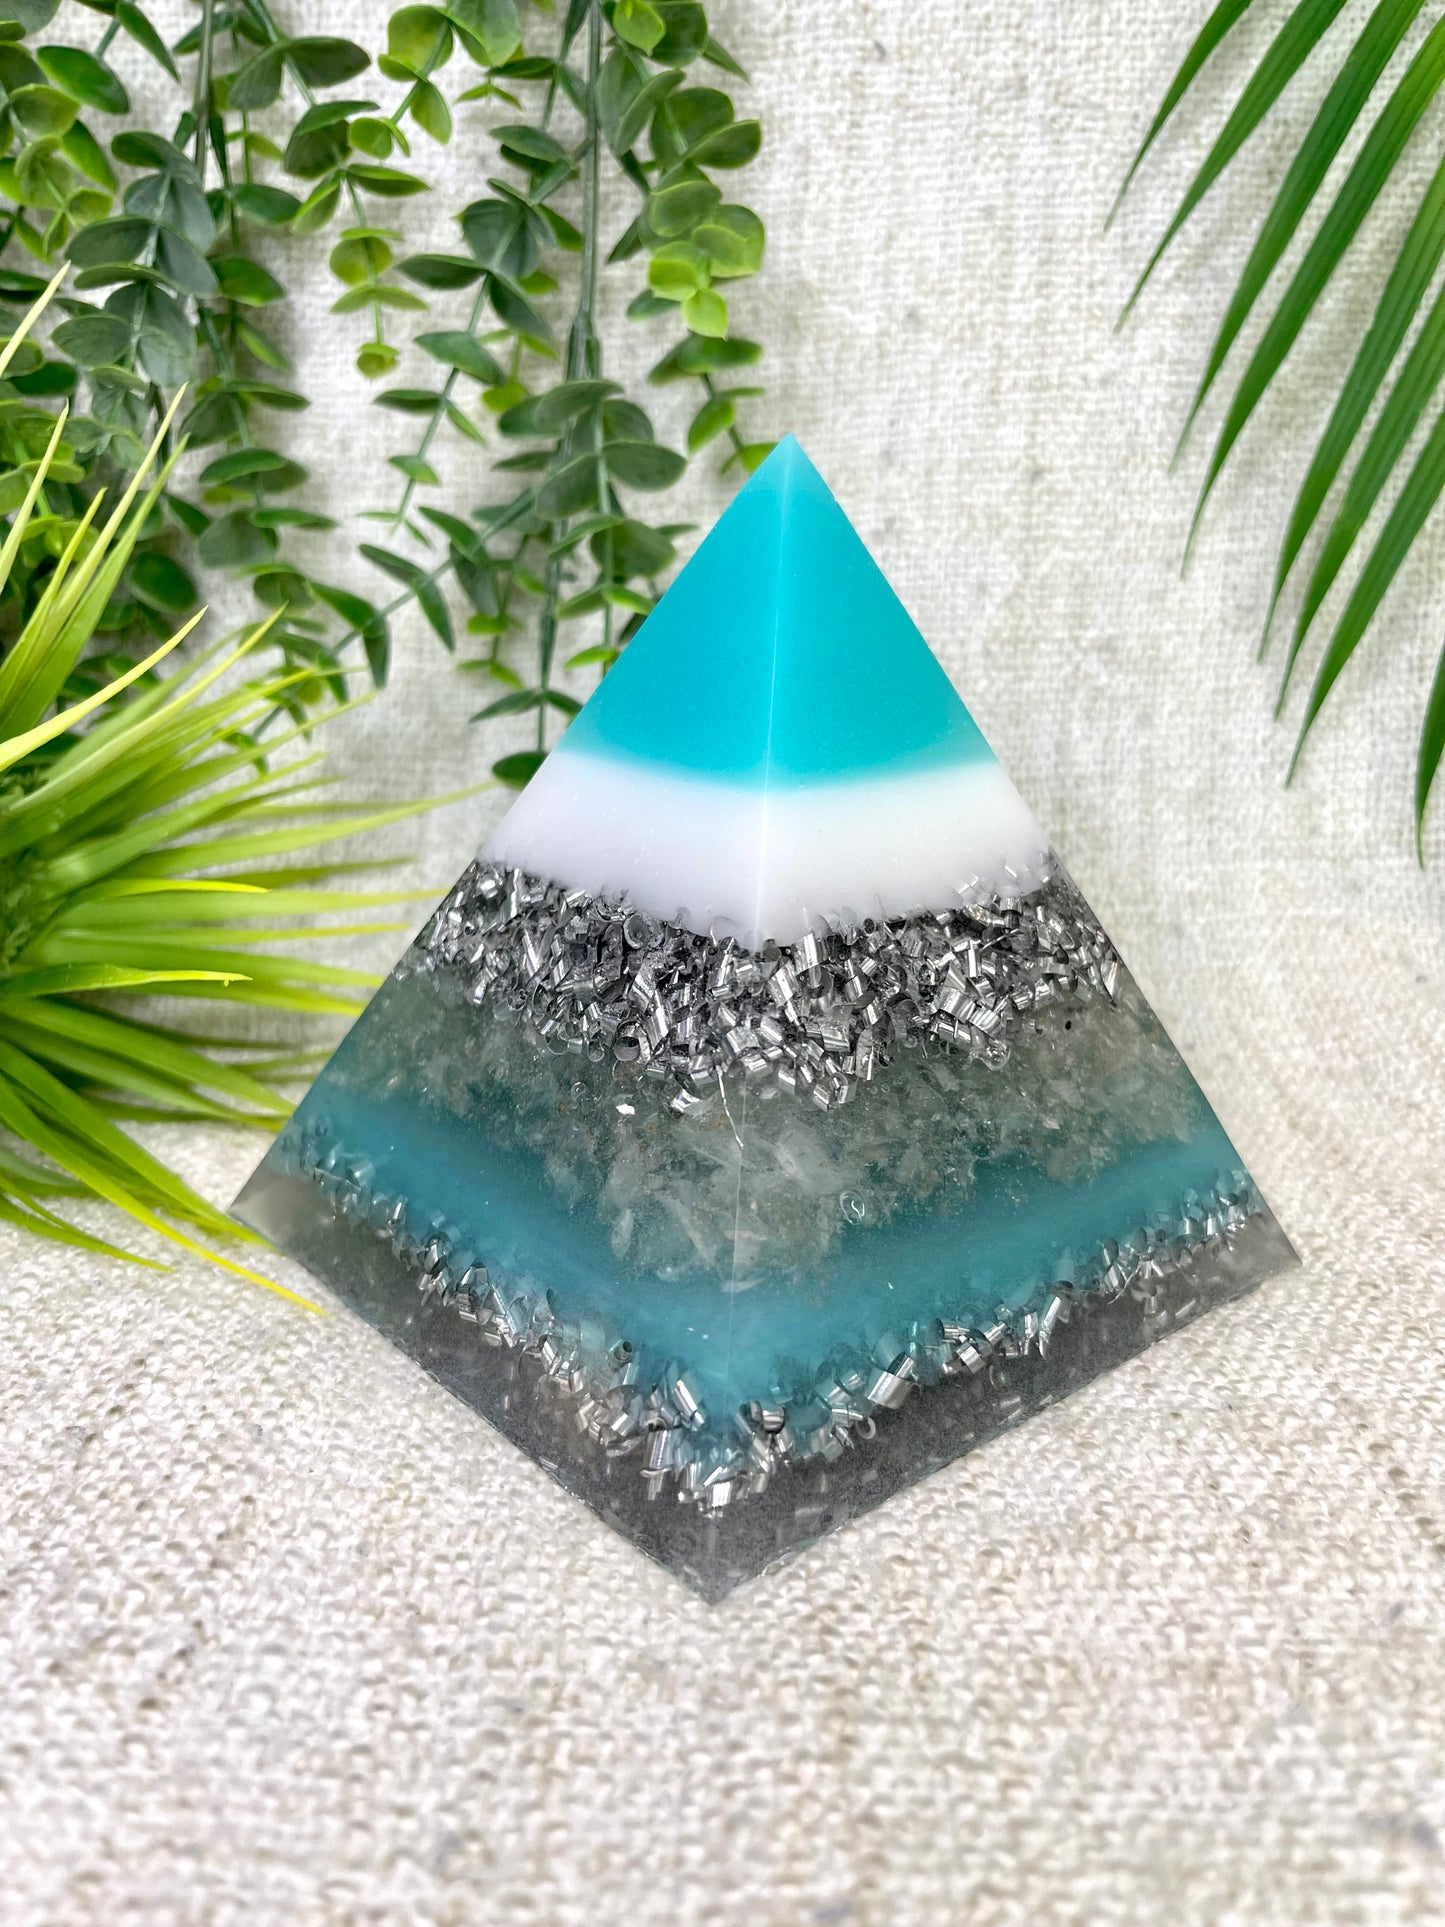 KELLY - Orgonite Pyramid - EMF Protector - White Quartz and Aluminum Metal